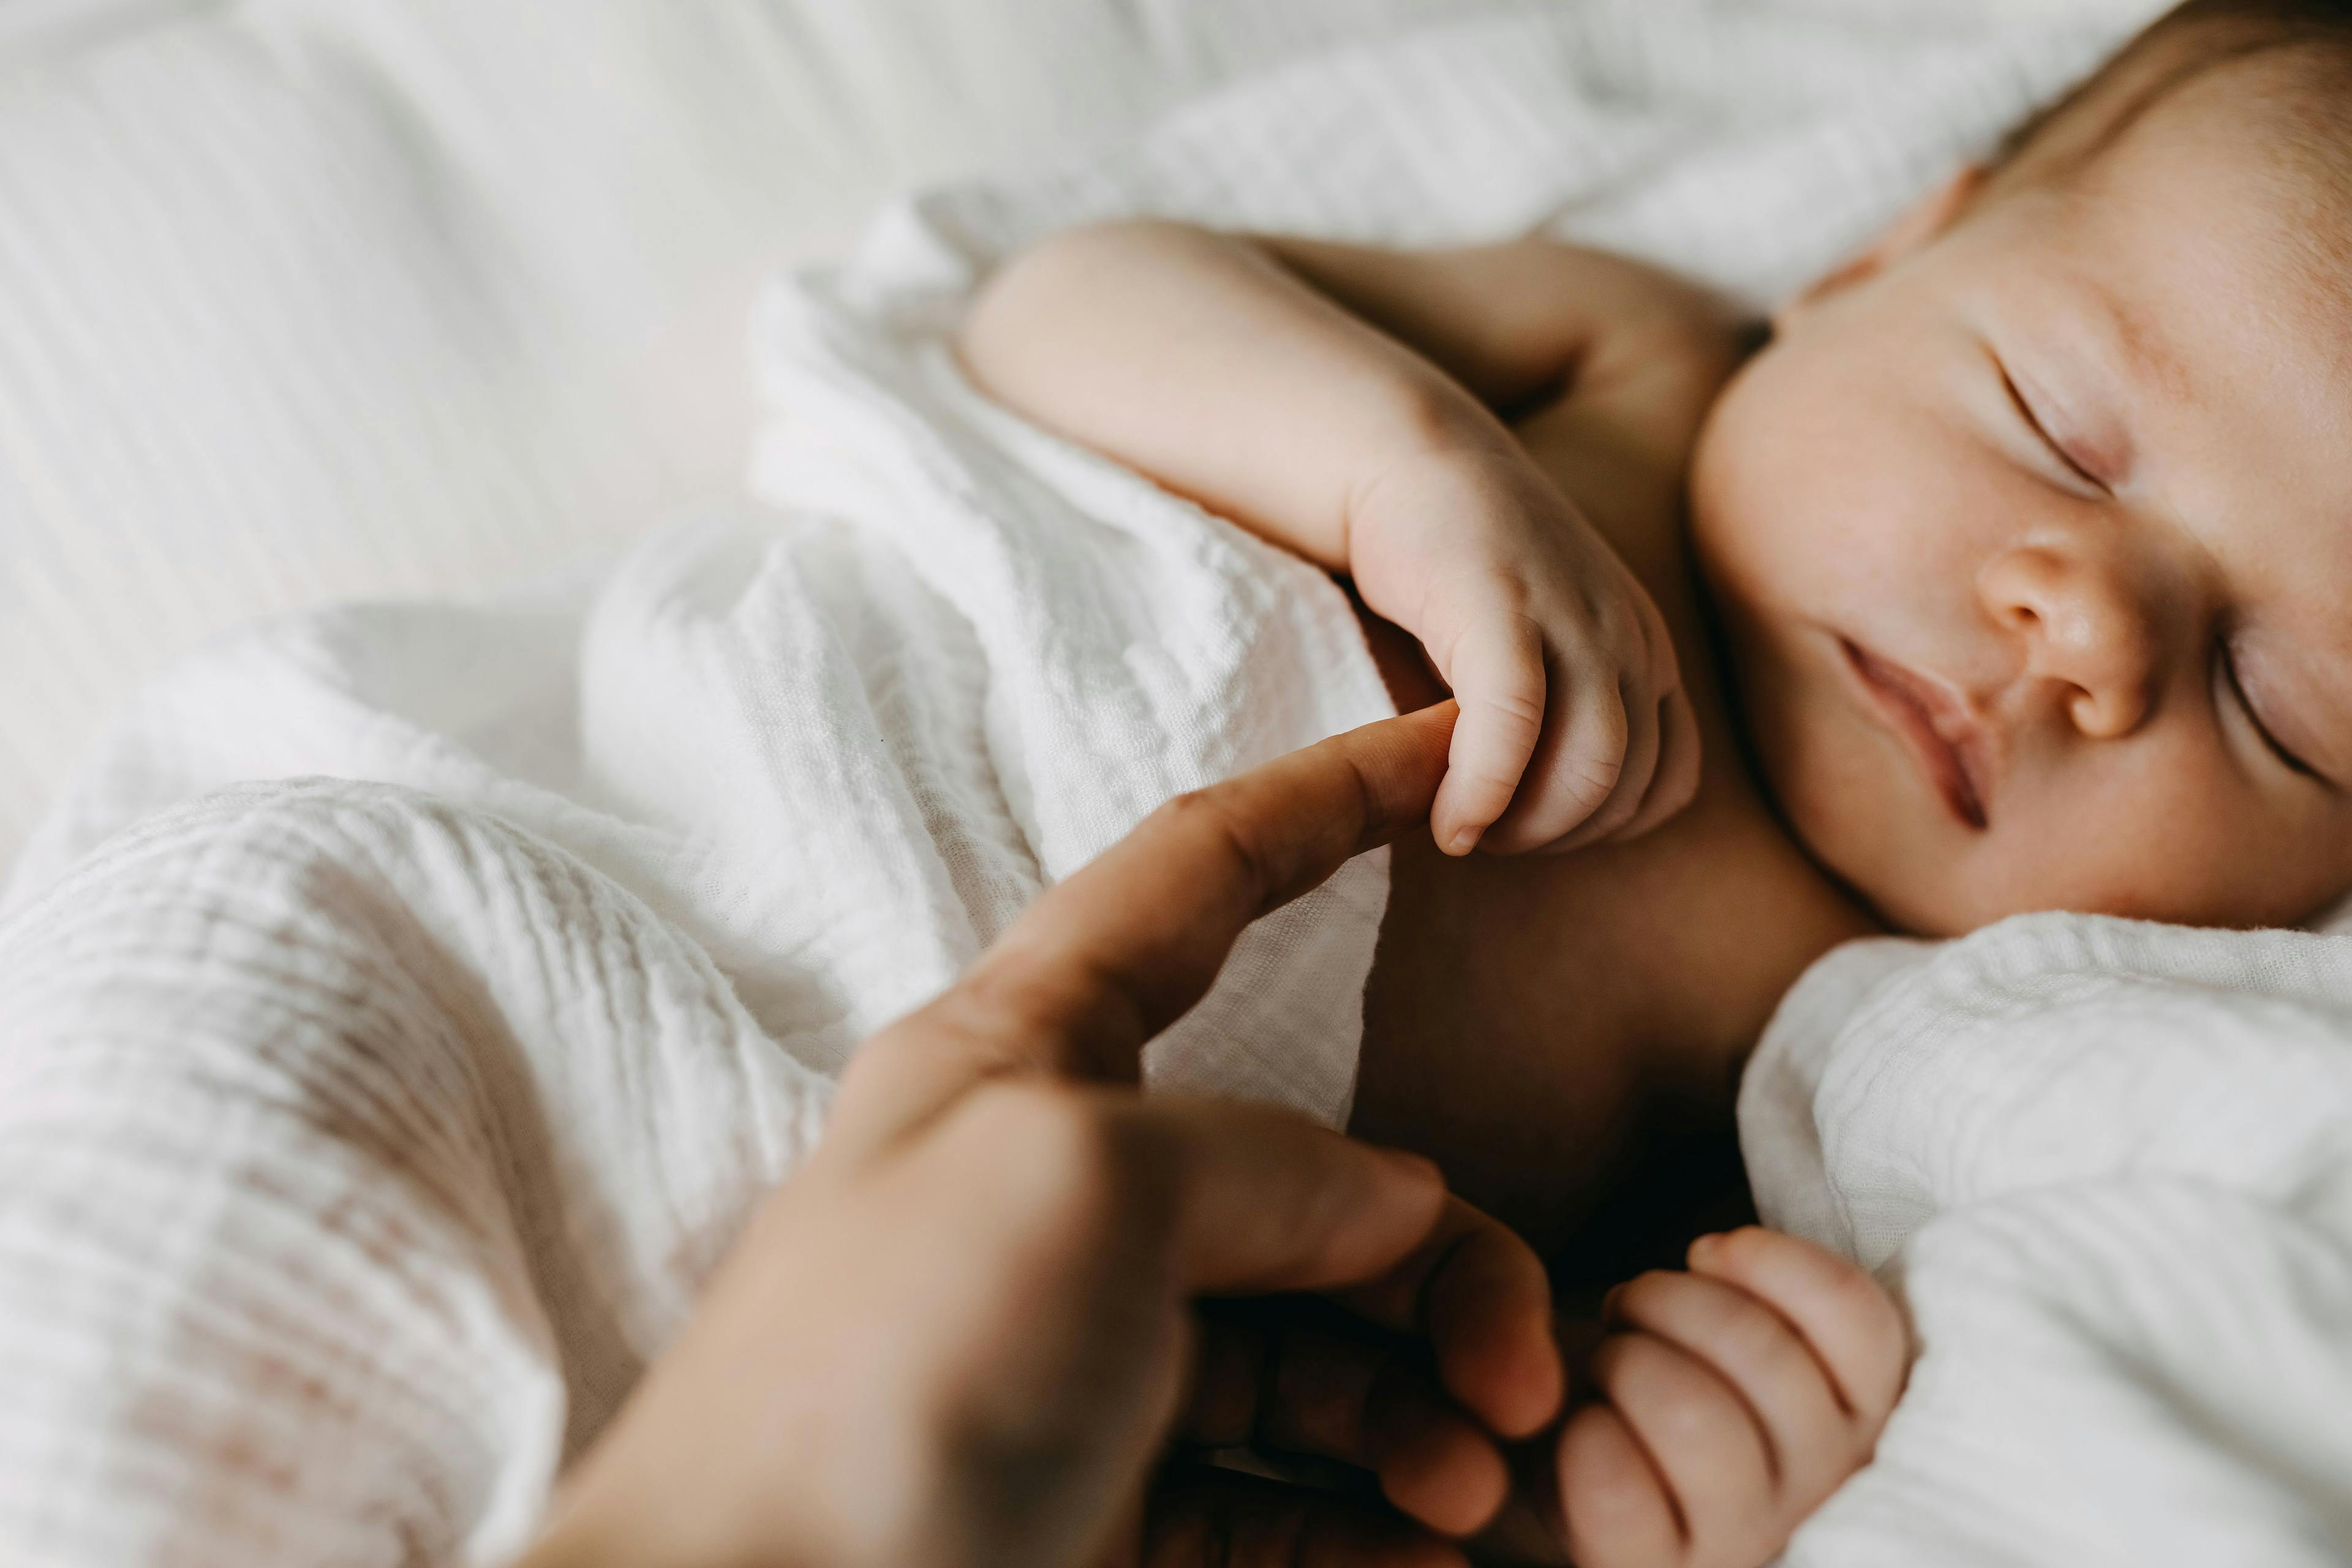 Infant holding their mother's finger